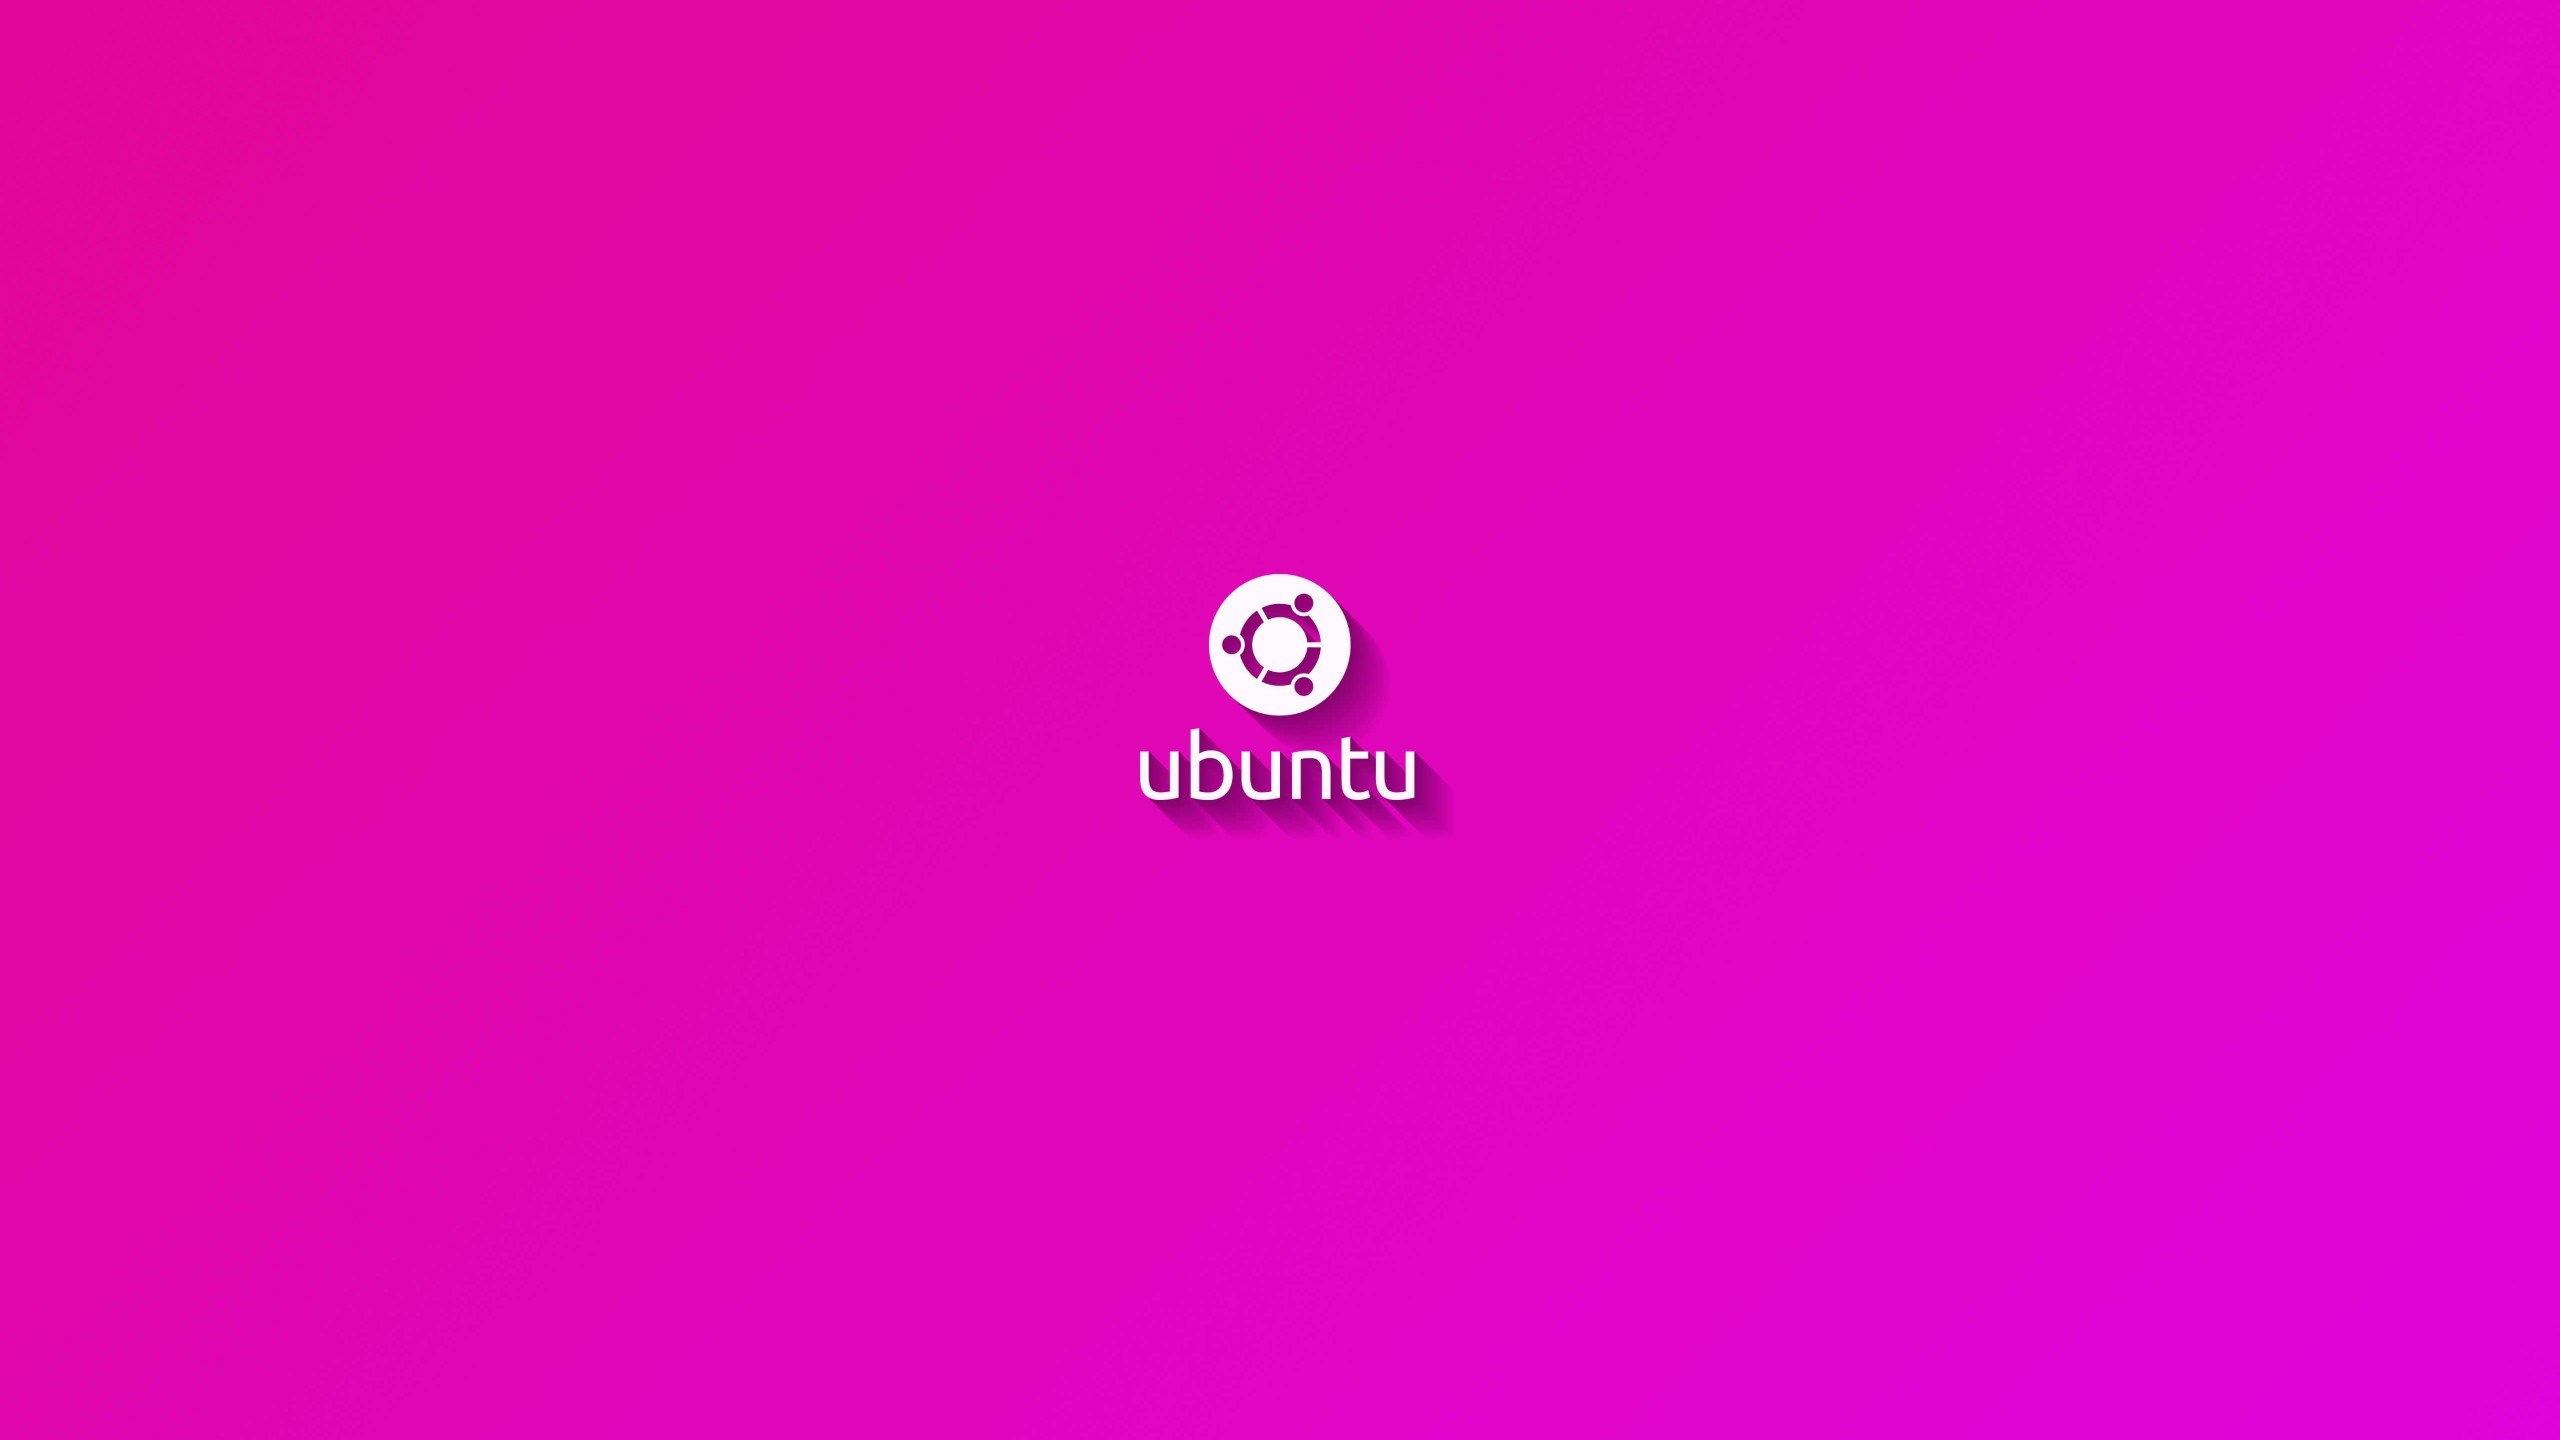 Ubuntu Flat Shadow Pink Wallpaper for Desktop 2560x1440